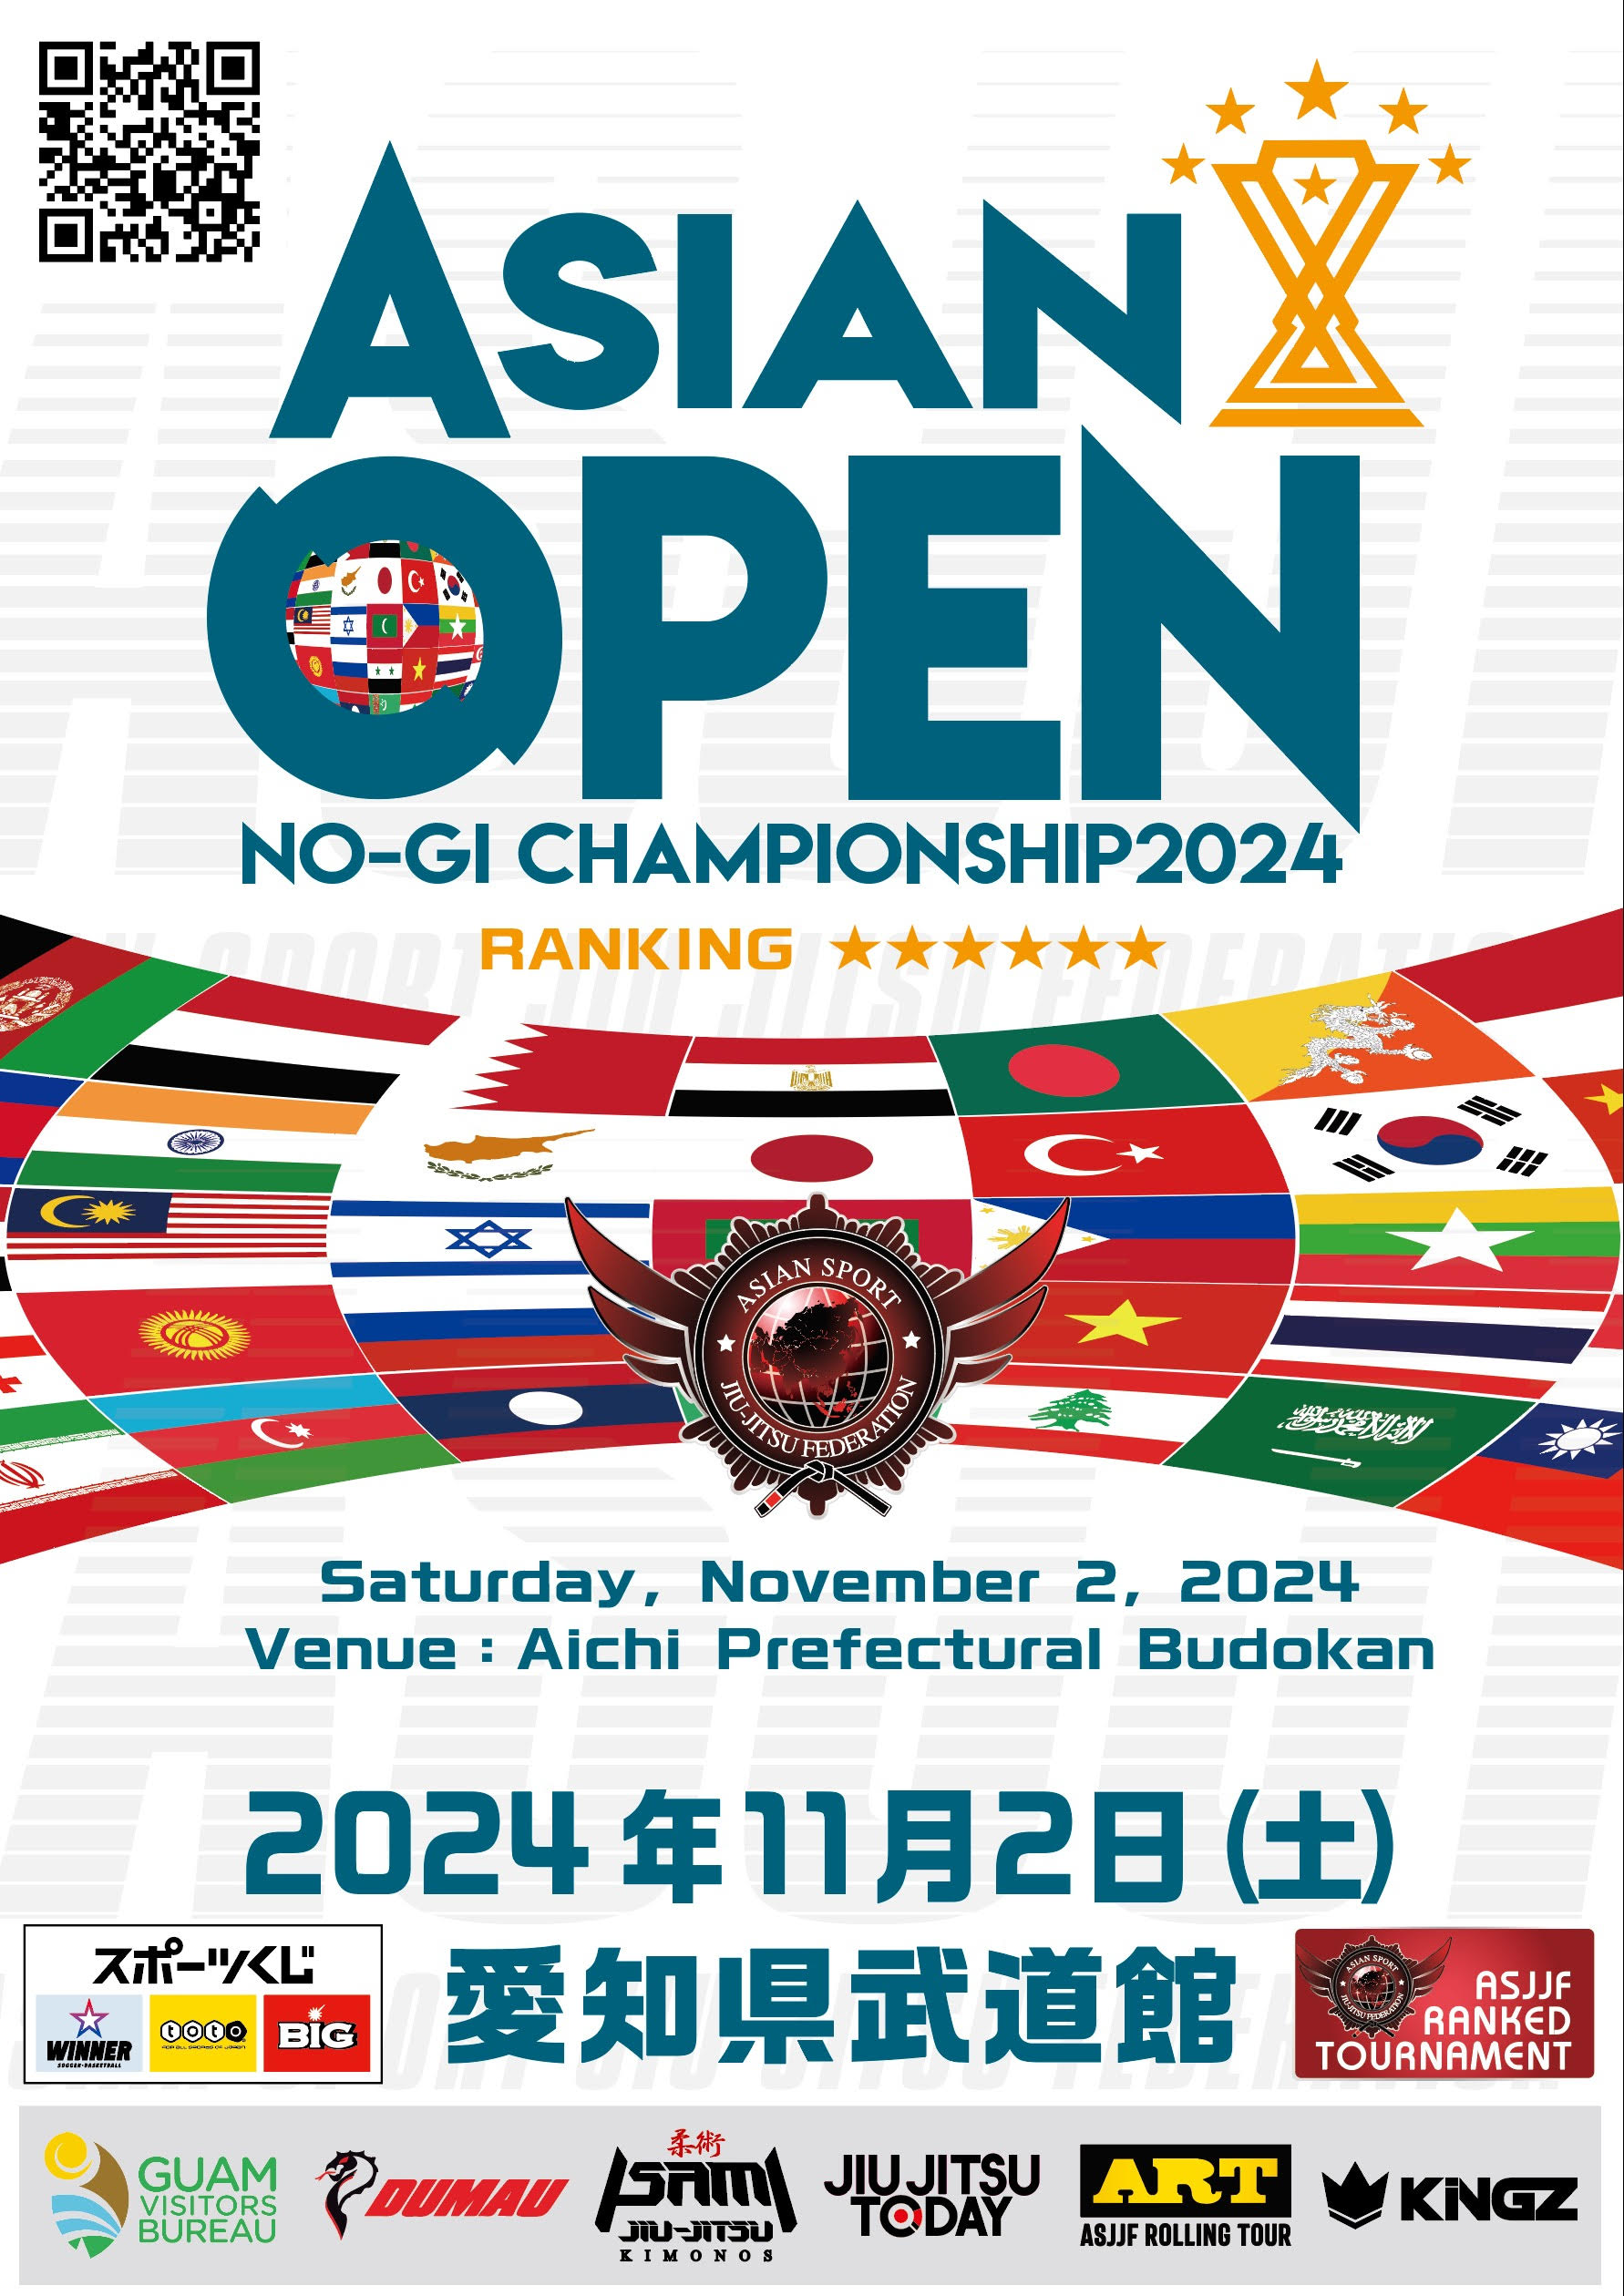 asjjf asian open no-gi championship 2024